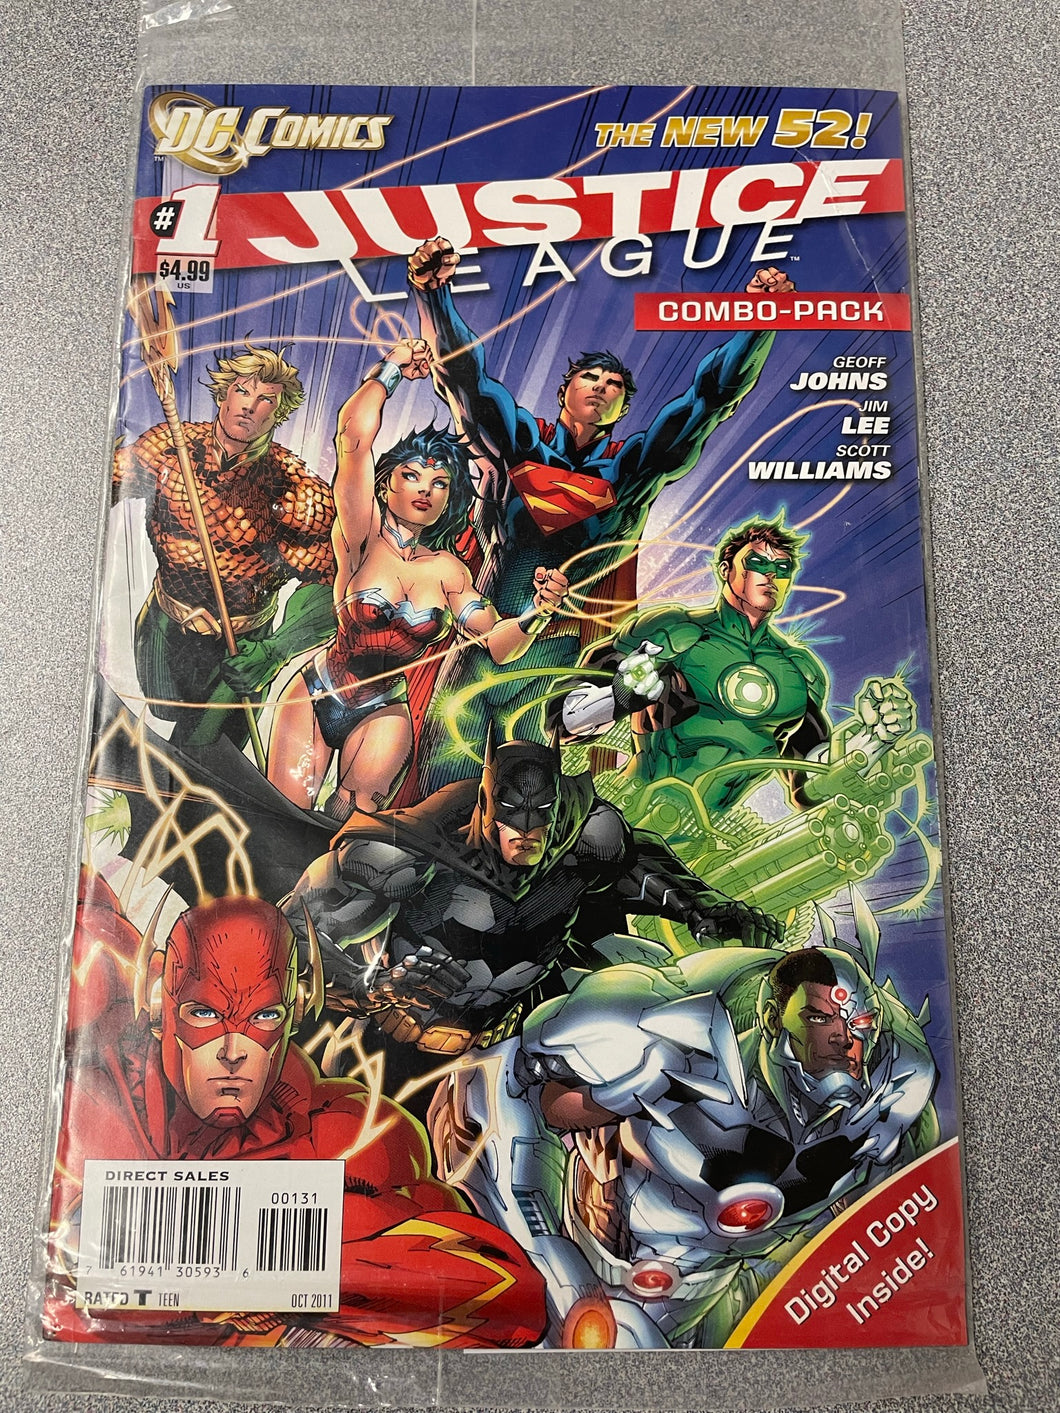 DC Comics The New 52! Justice League #1 Combo-Pack, Johns, Geoff et al., [Oct, 2011] GN 1/23